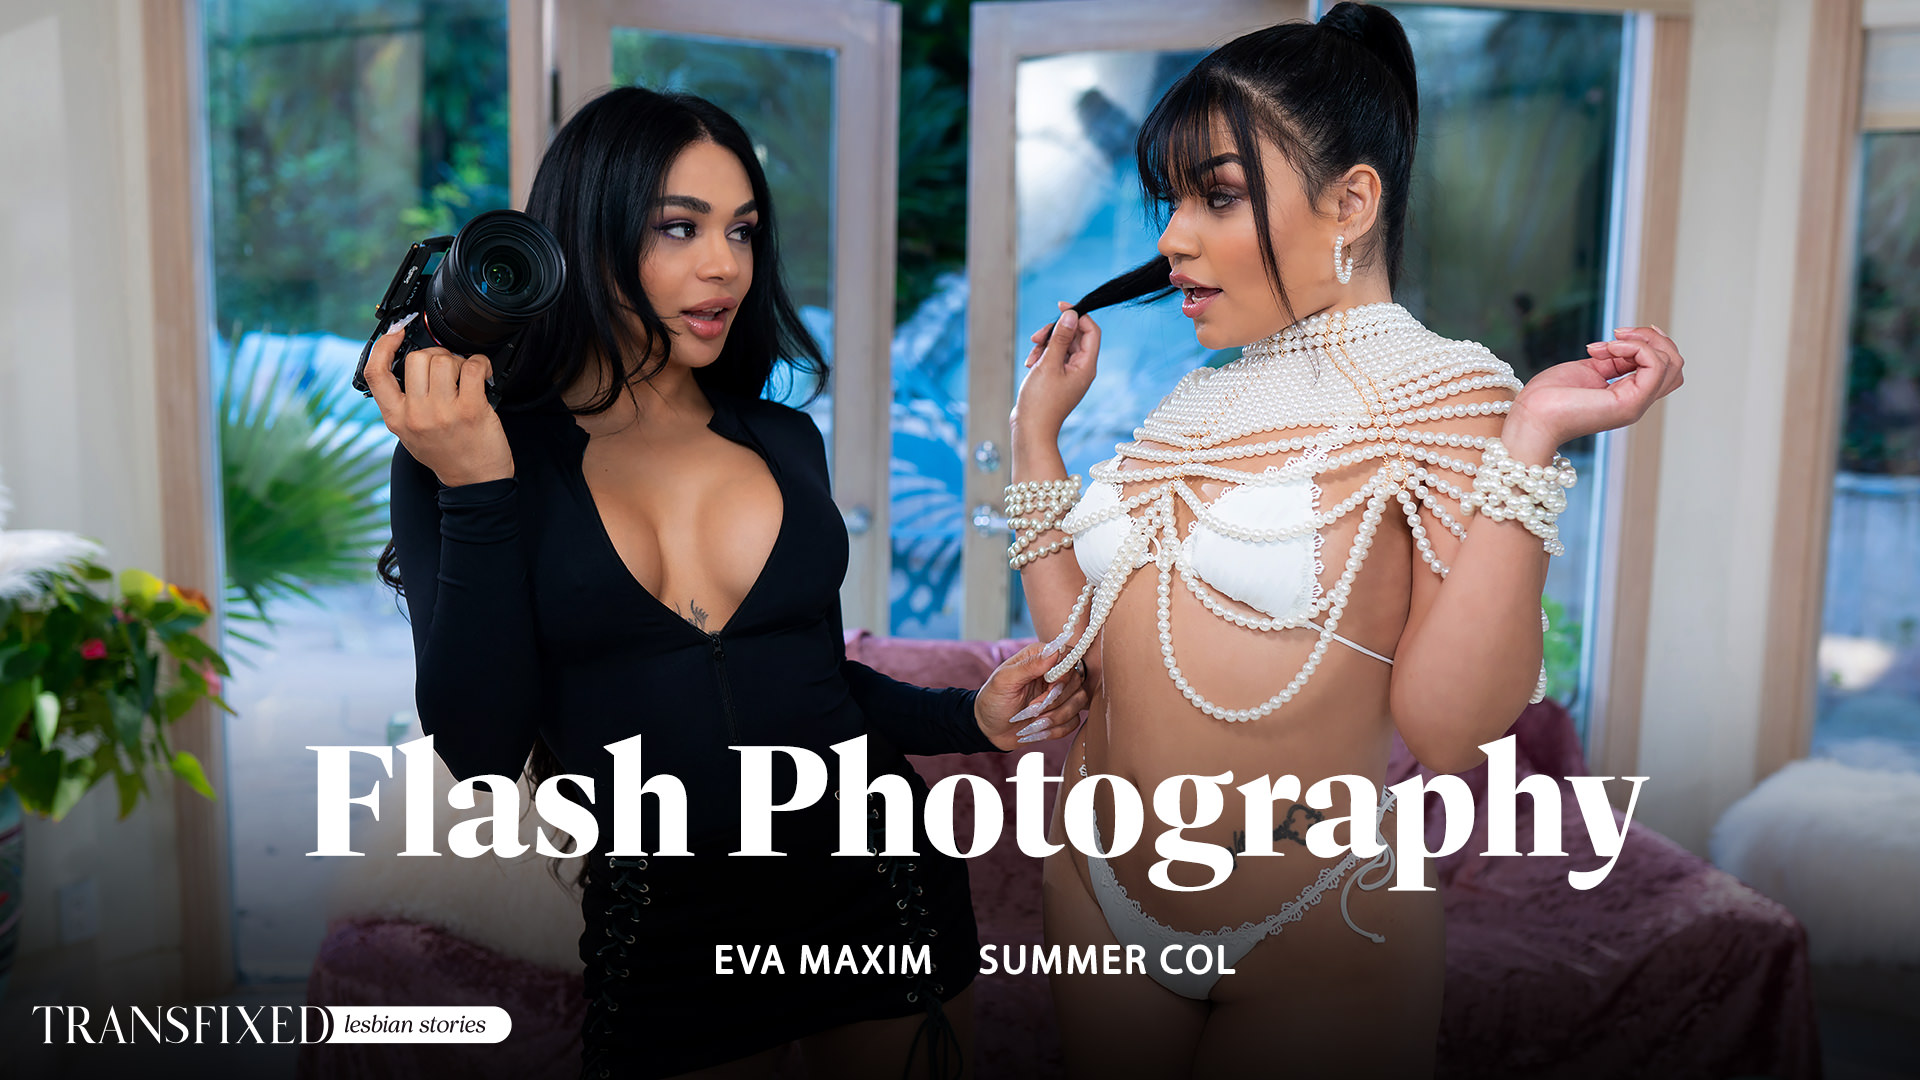 Eva Maxim, Summer Col “Flash Photography” Transfixed